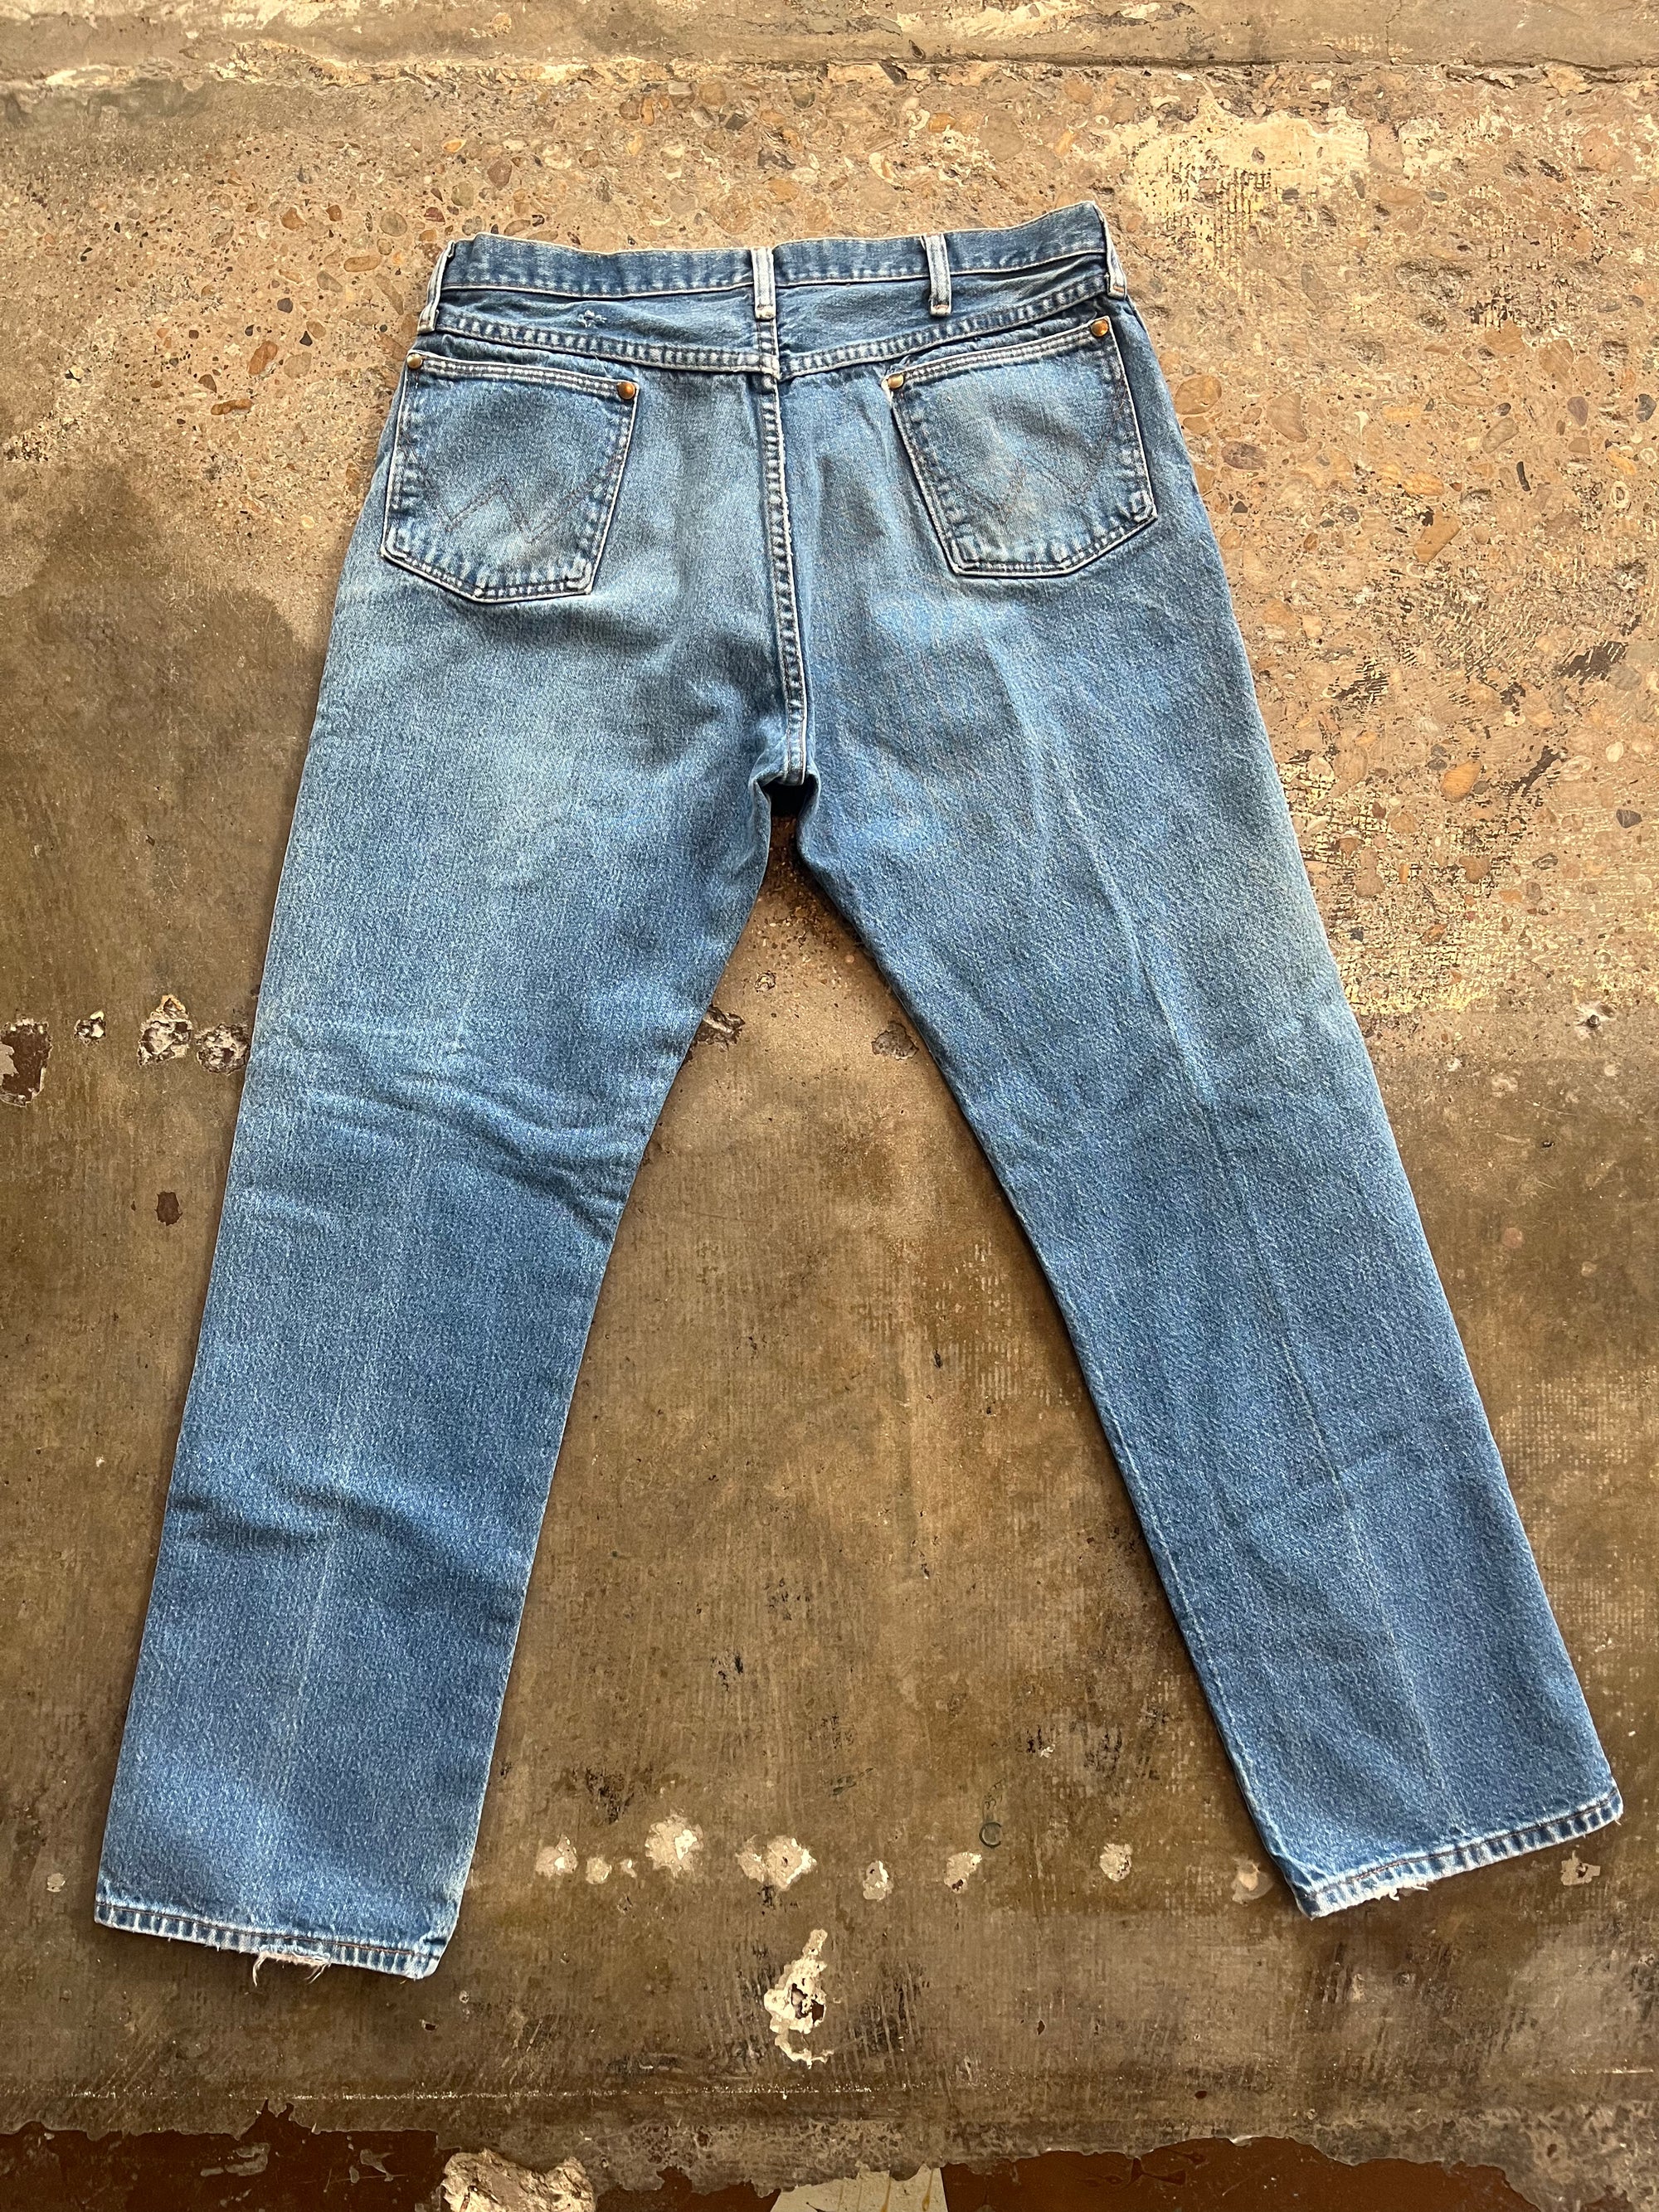 90s Distressed Wrangler Jeans